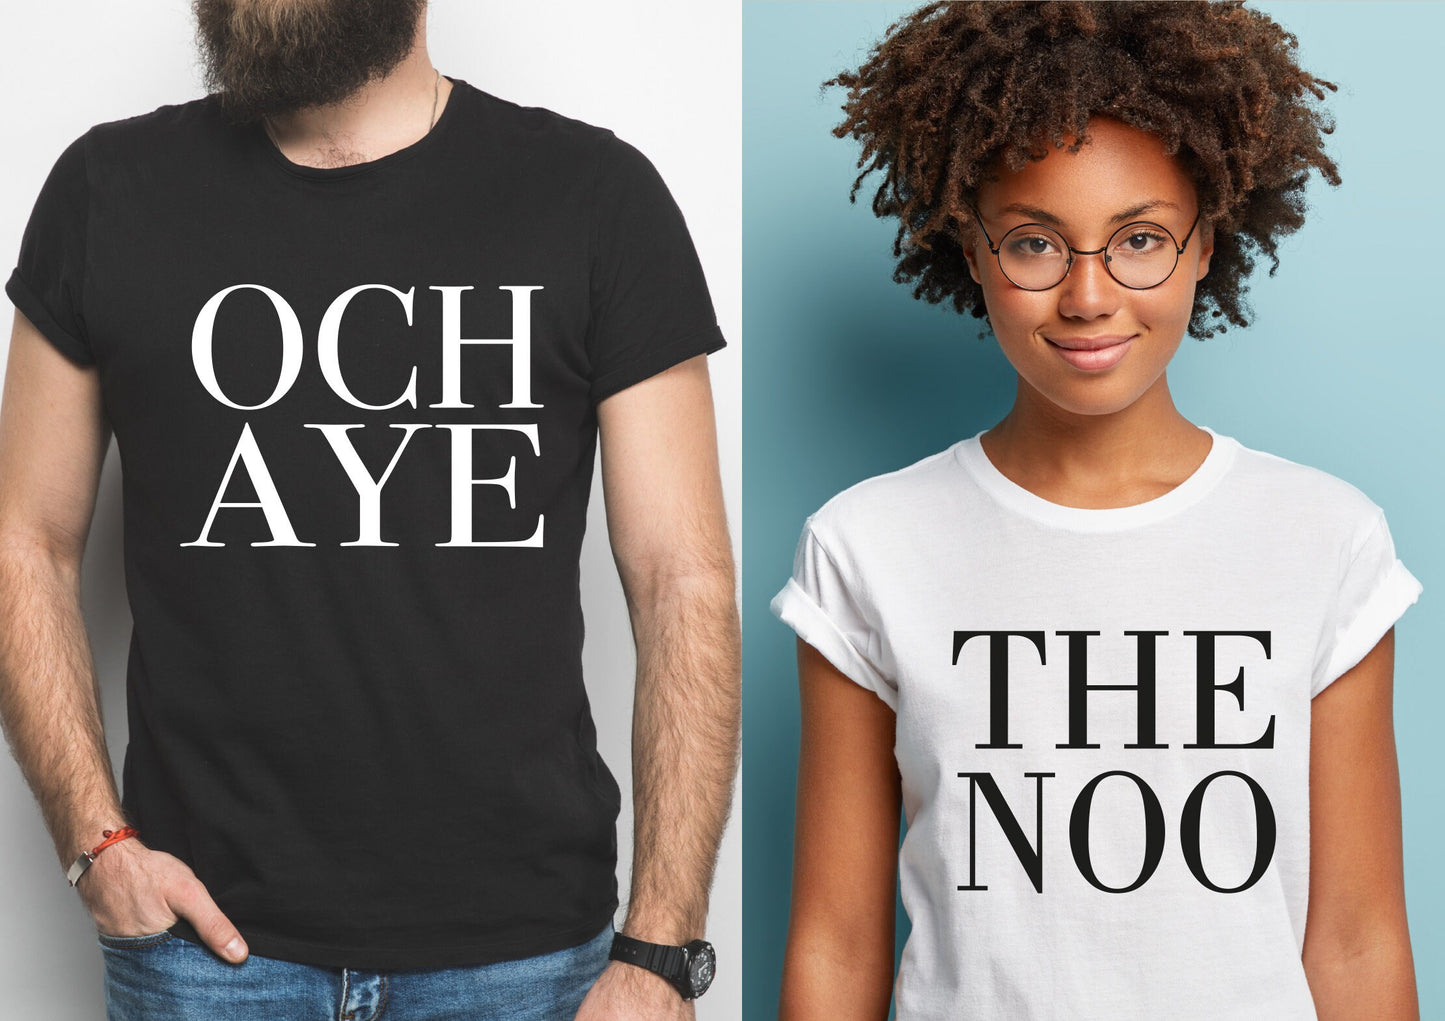 Och Aye / The Noo Matching T-Shirts - Funny Scottish Slang Saying tshirt tee